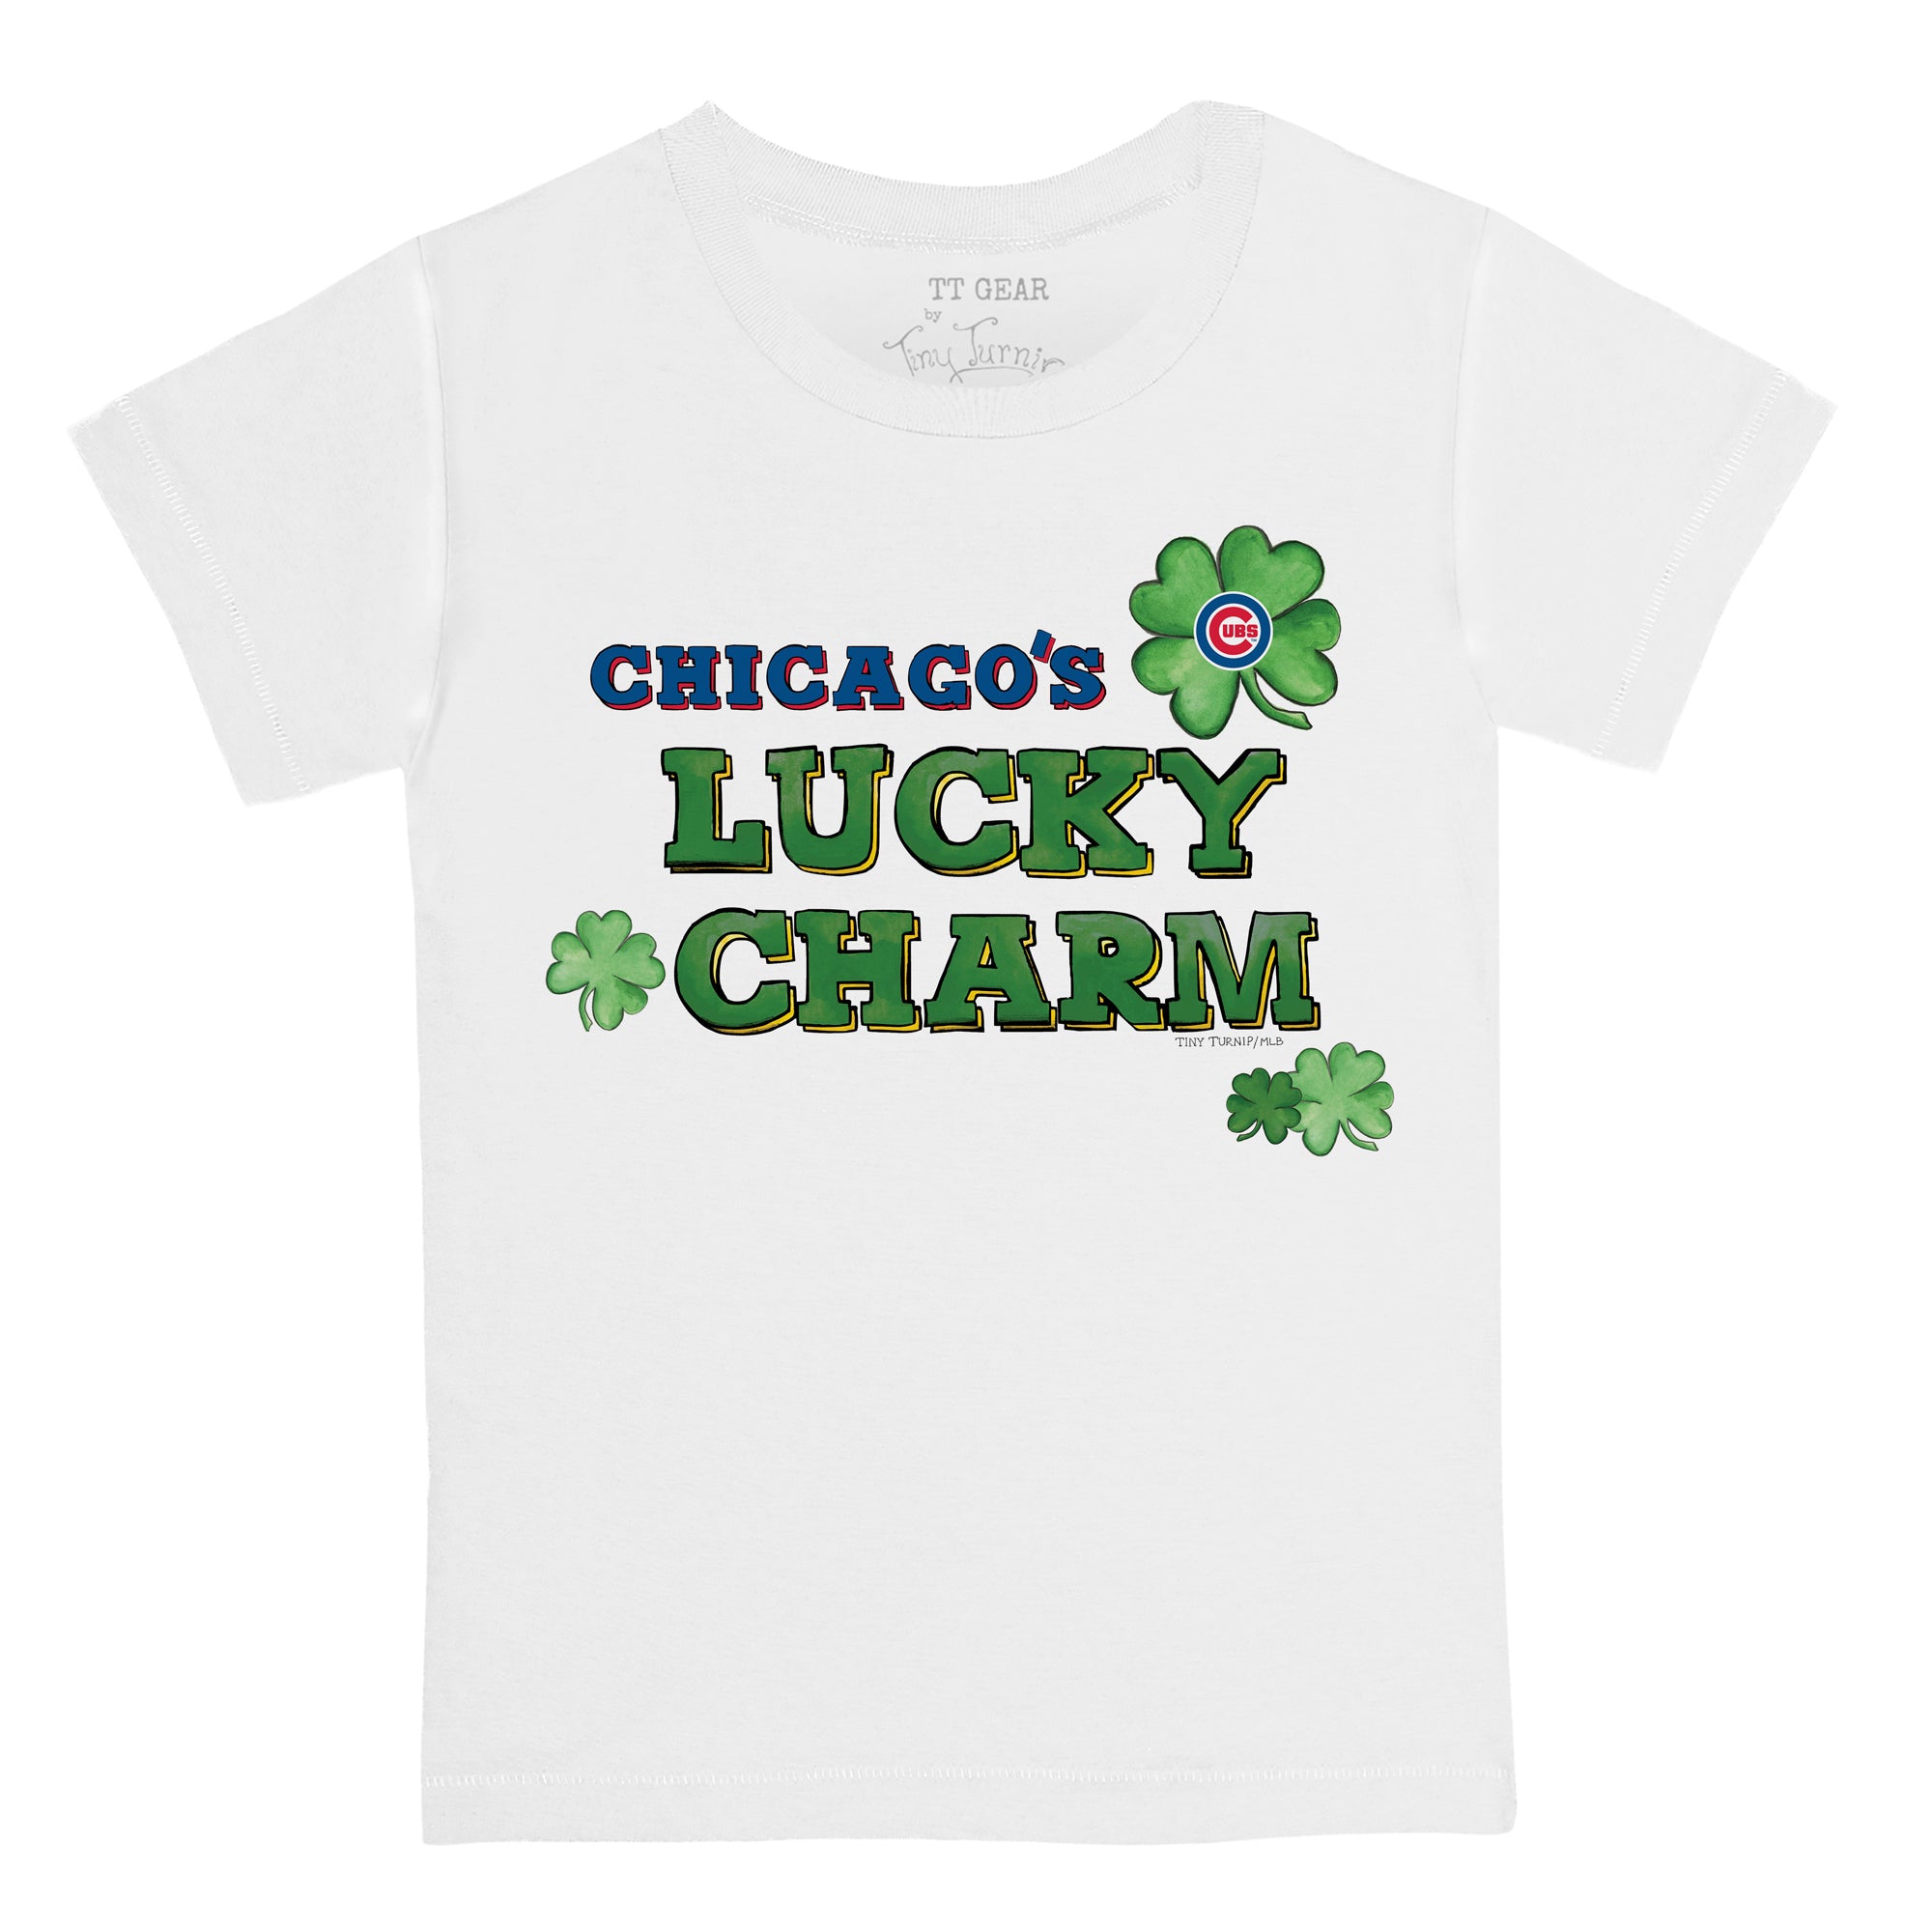 Lids Chicago Cubs Tiny Turnip Infant Baseball Bow T-Shirt - White